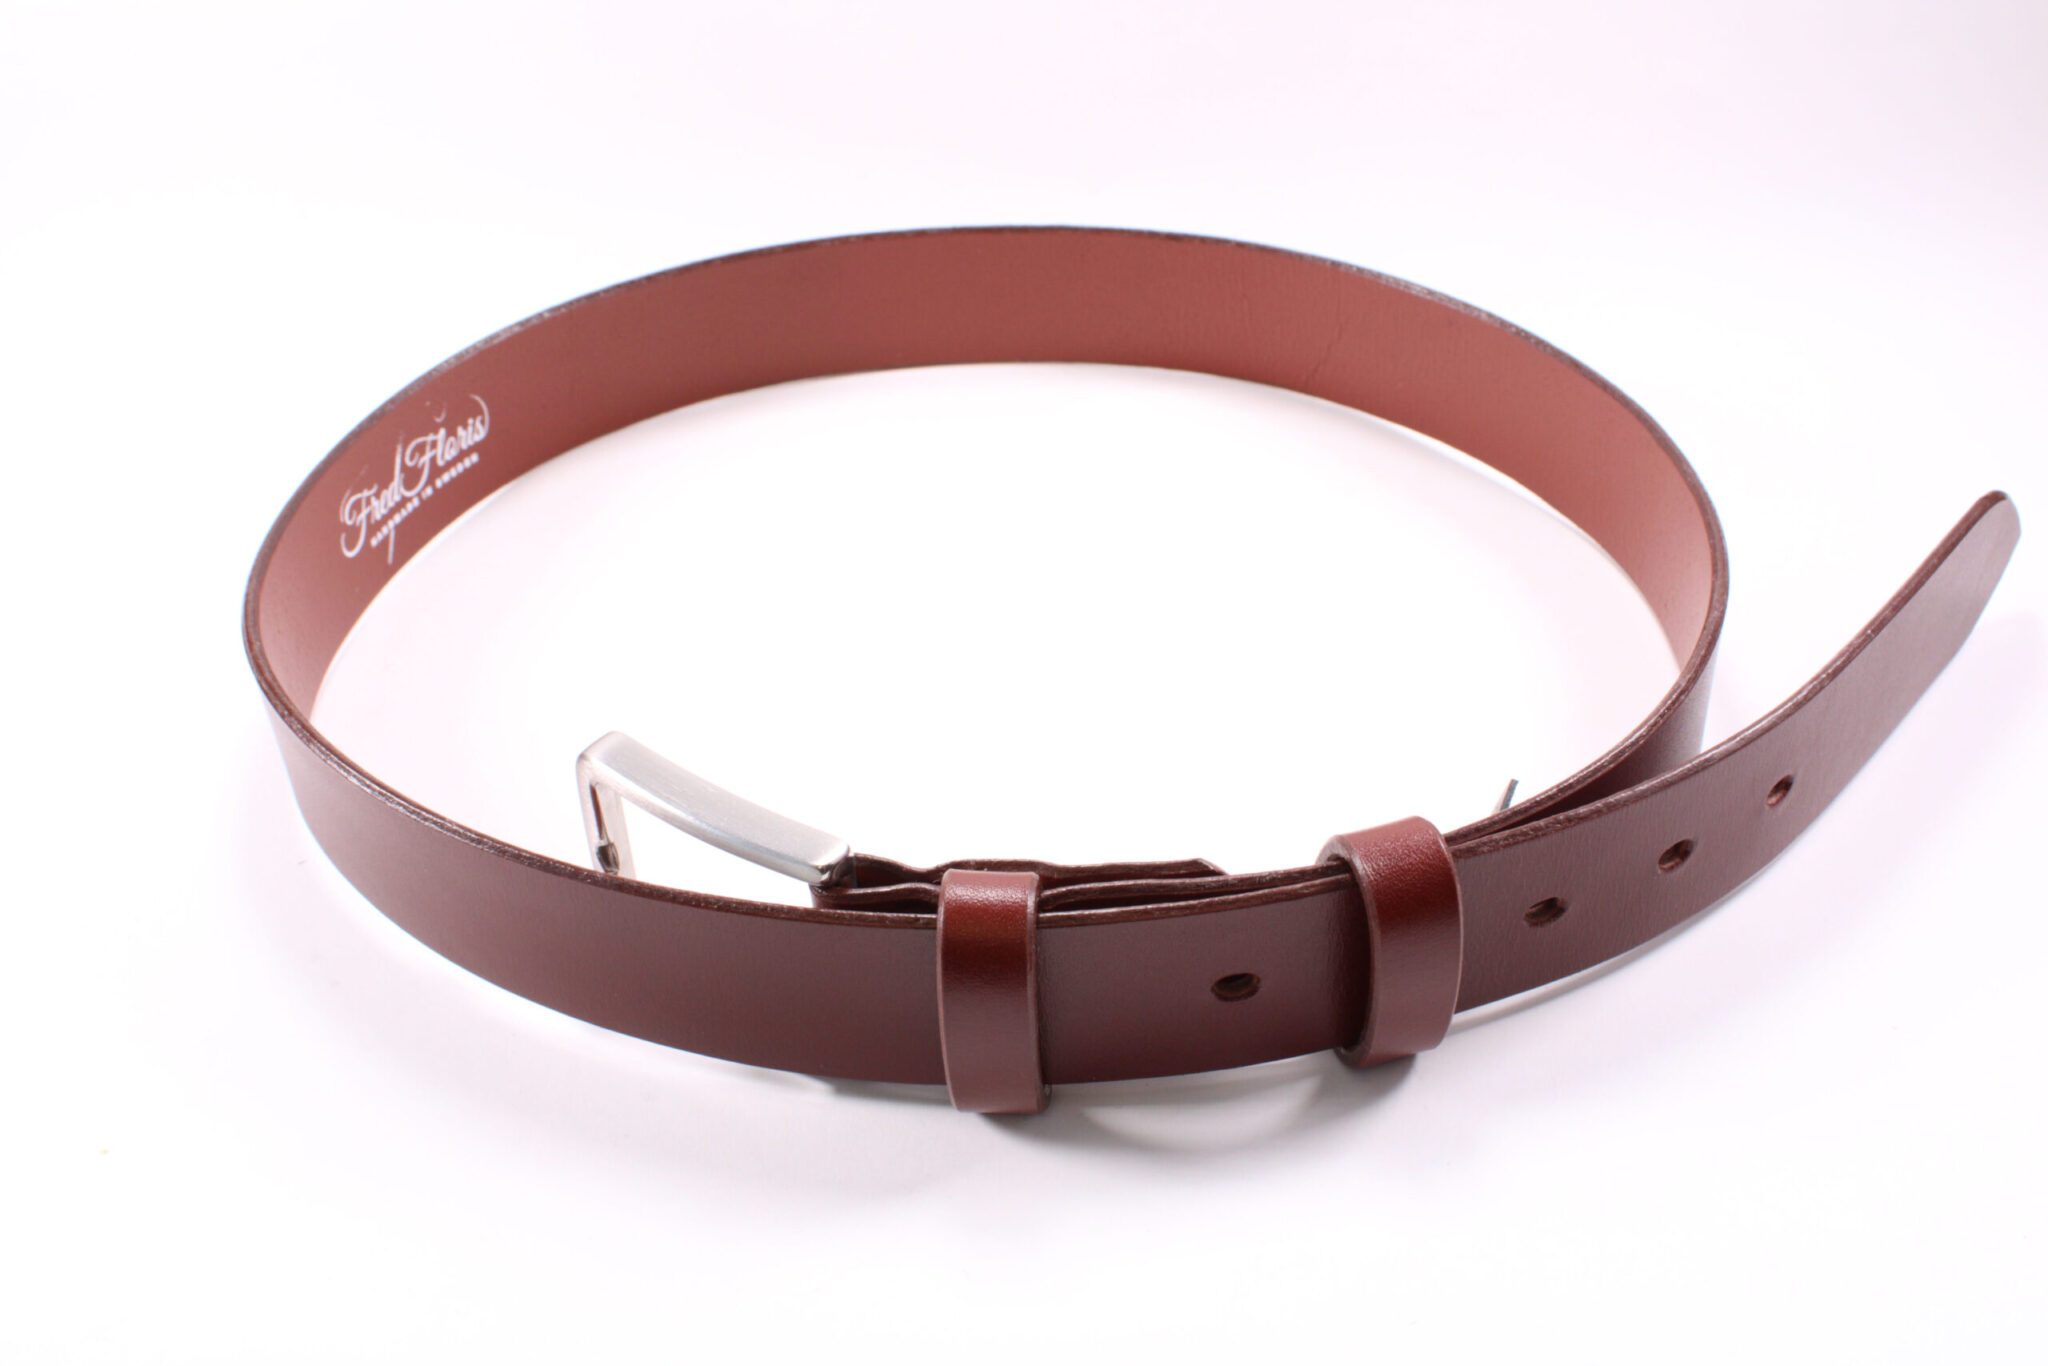 Product image of FredFloris handmade mahogany full-grain leather mens belt